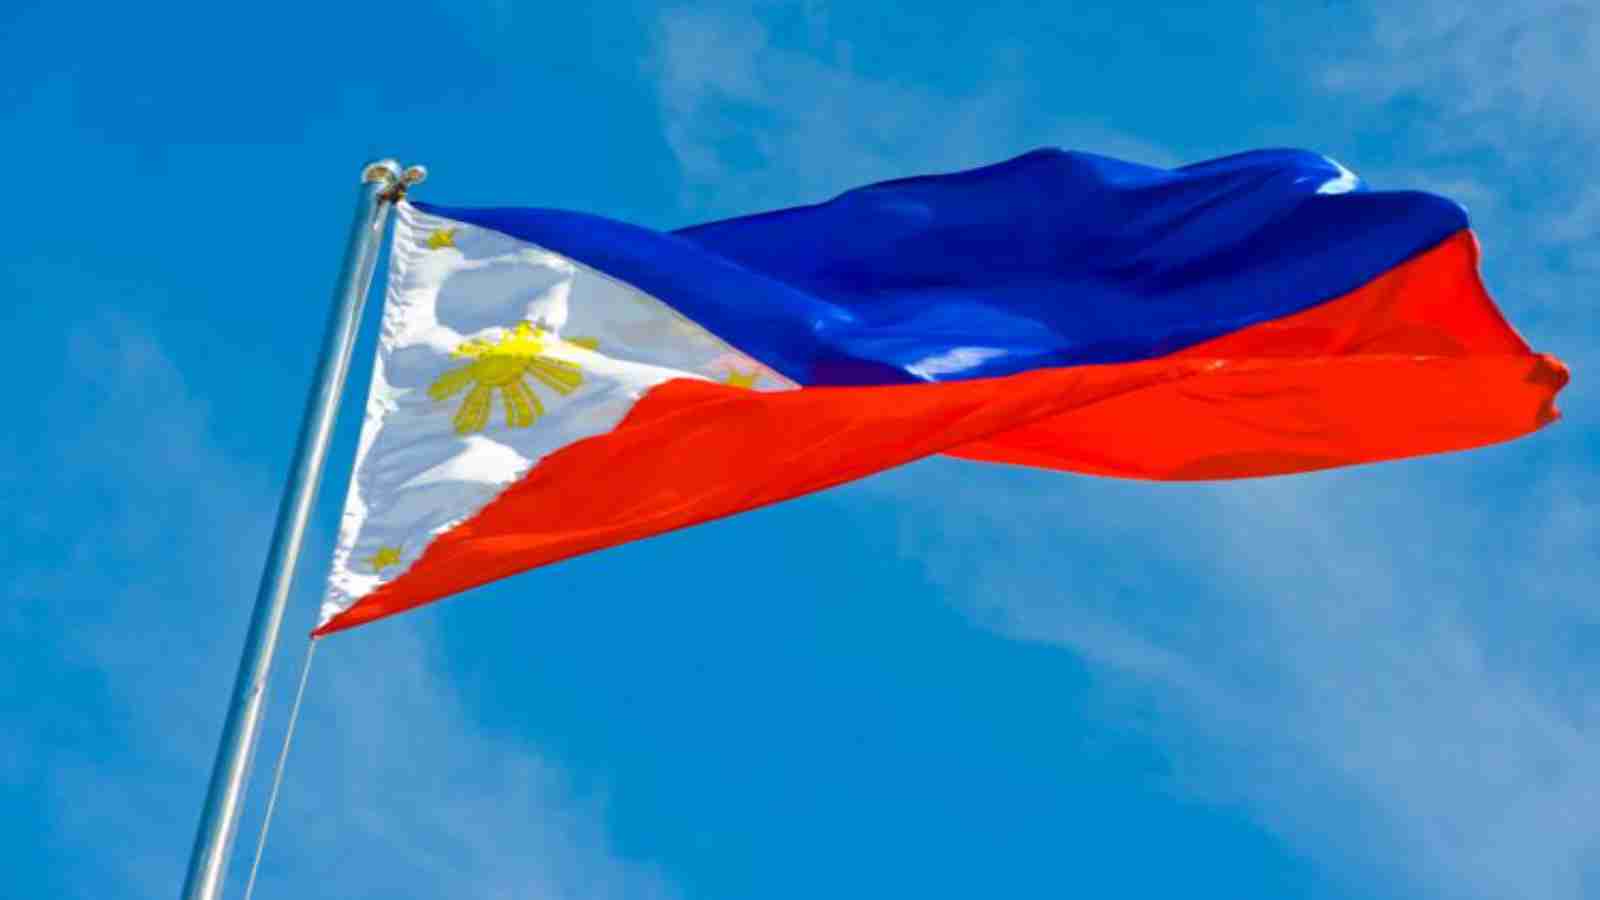 Philippines Republic Day 2022